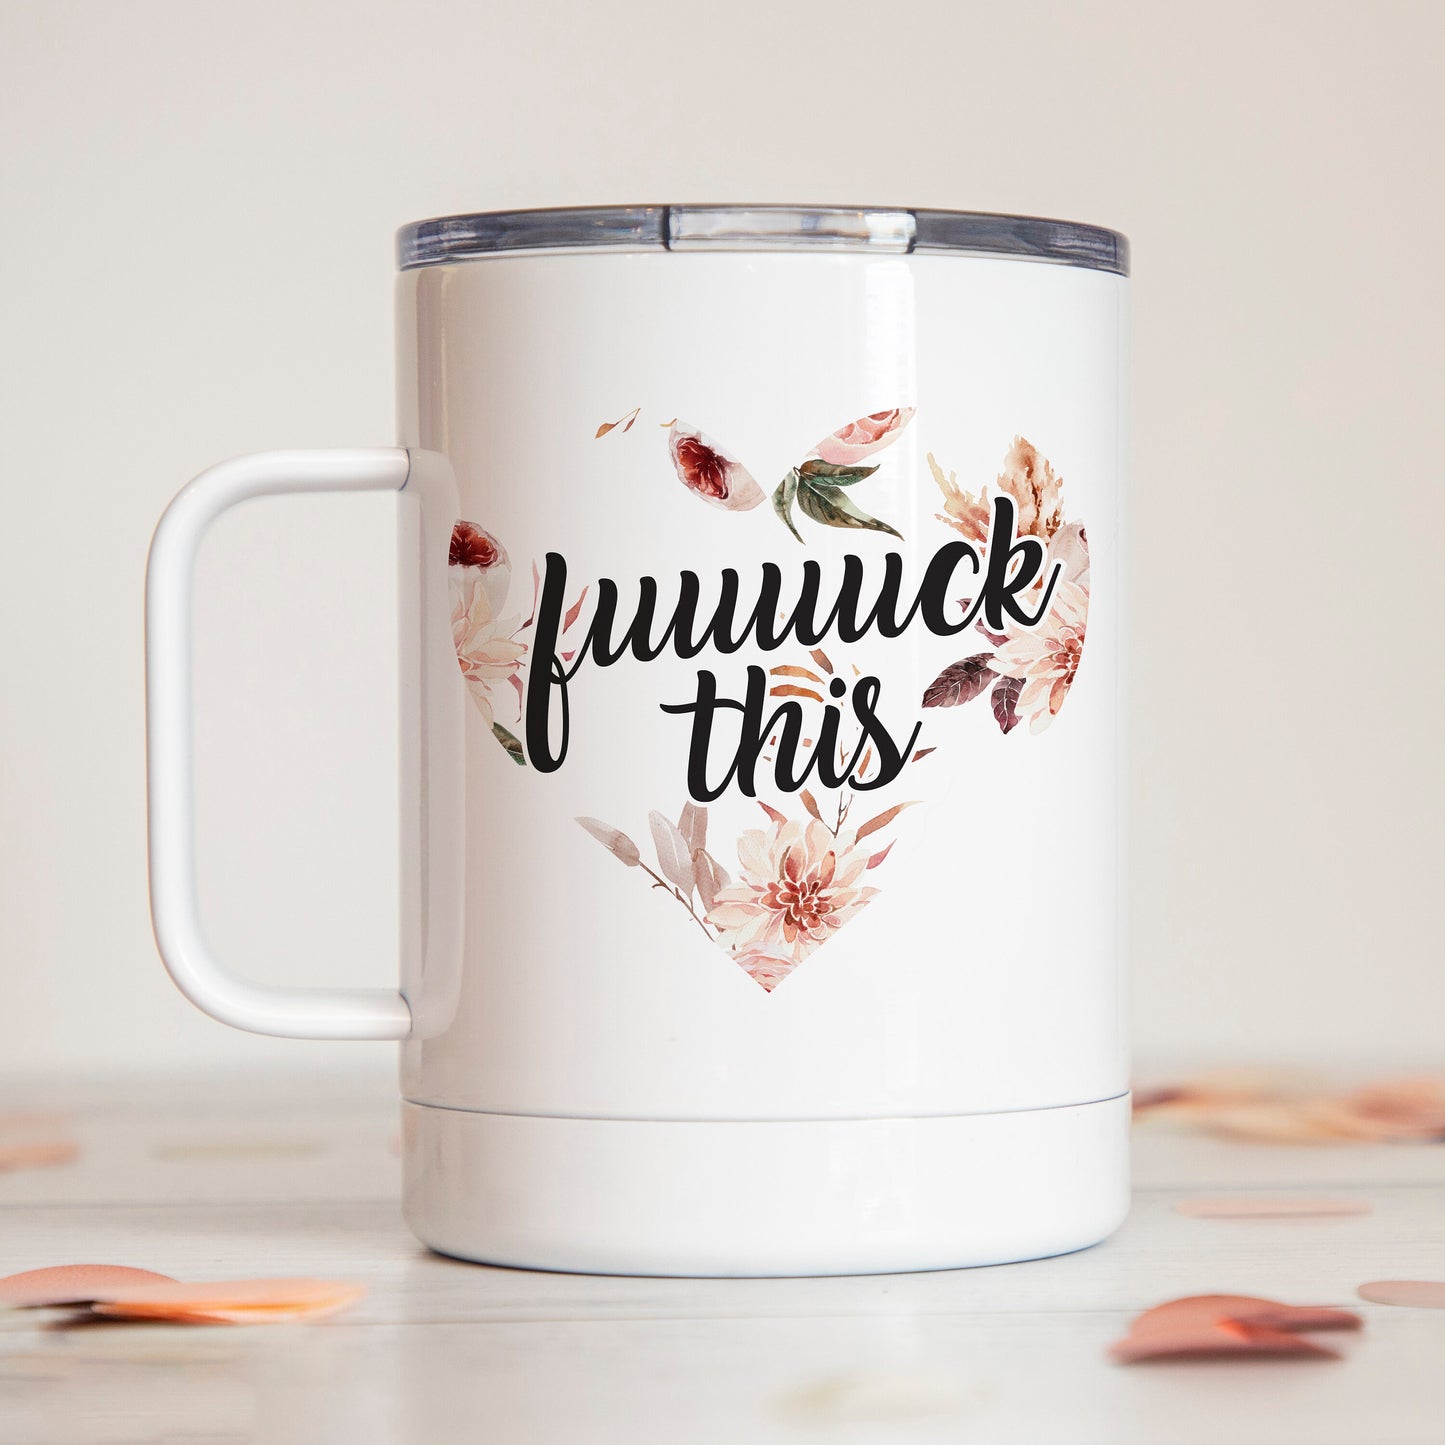 Fuuuuck This Insulated Camp Mug